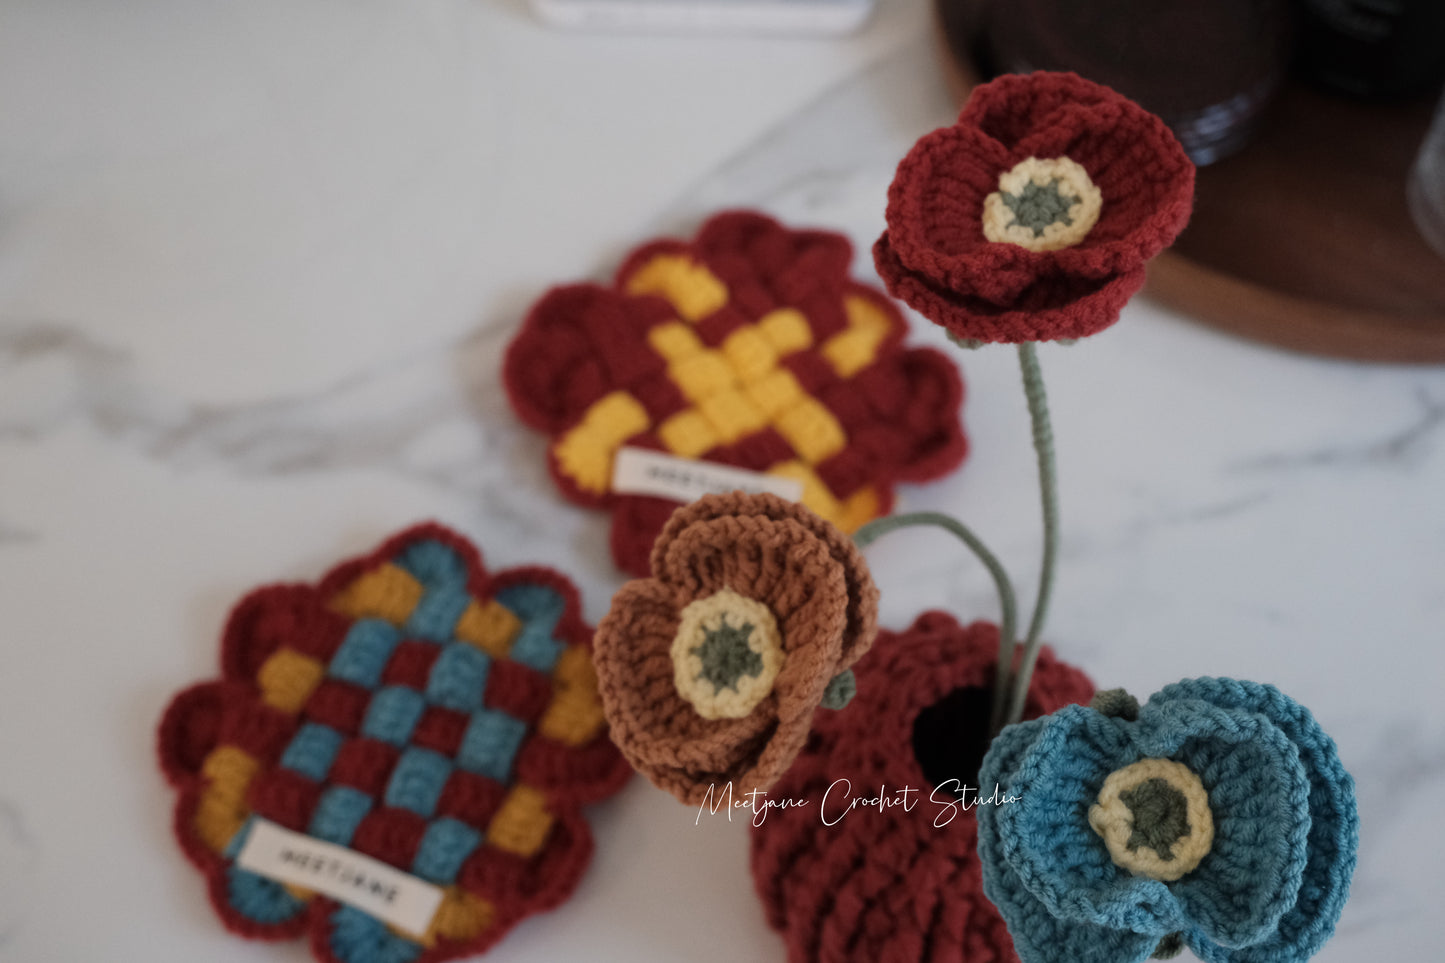 Crochet Workshop| Learn to crochet Chinese New Year Coaster|Beginner friendly